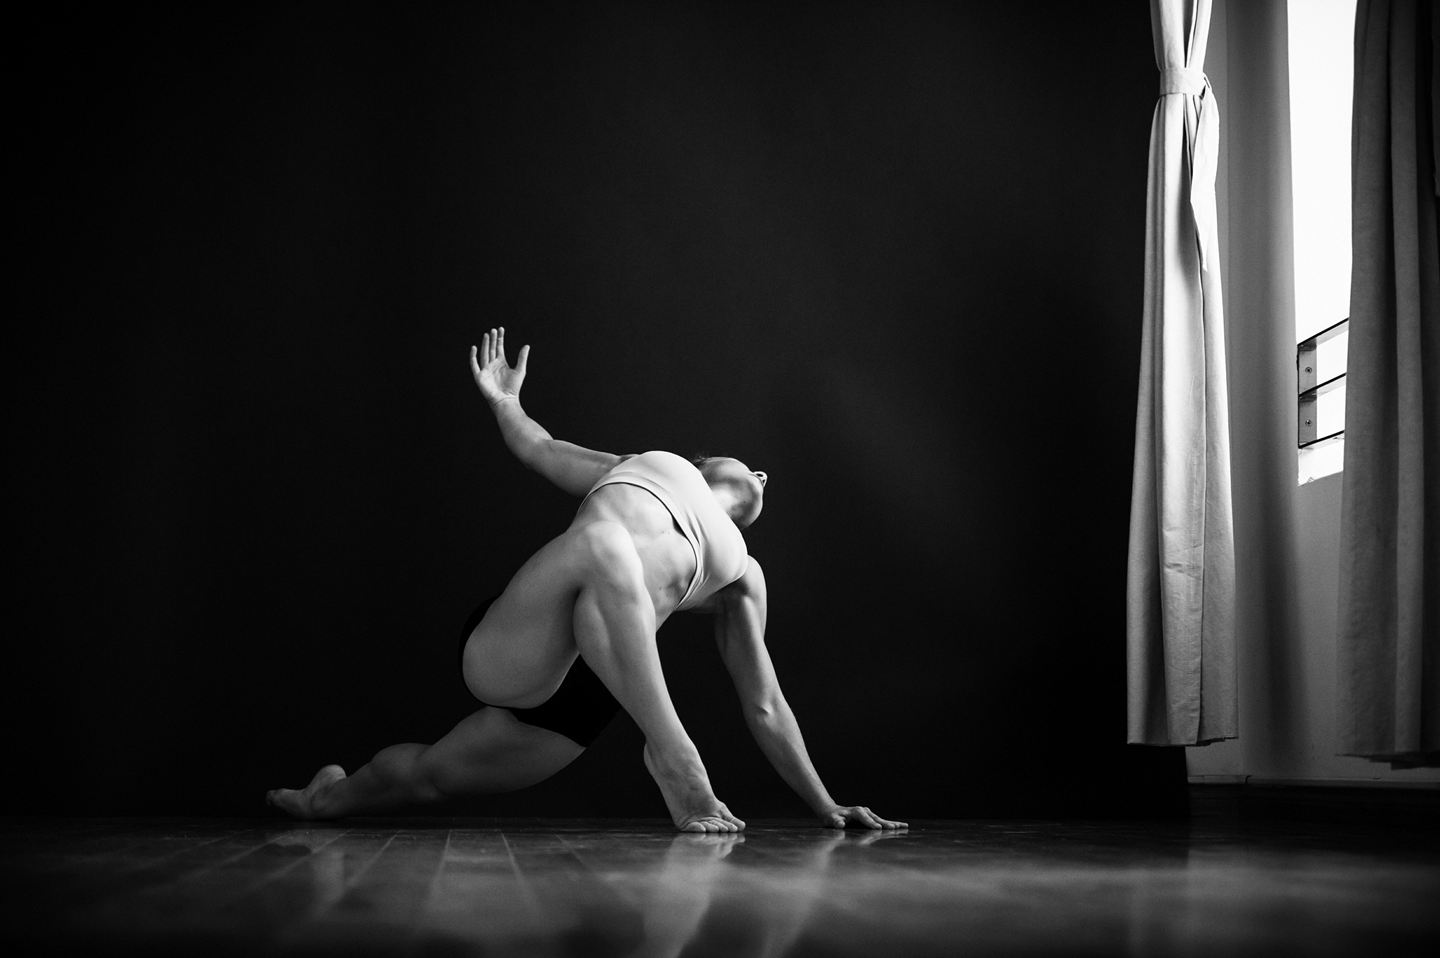 Los Angeles Dance Portrait Photo - Olga Sokolova - by Tommy Xing Photography 05.JPG